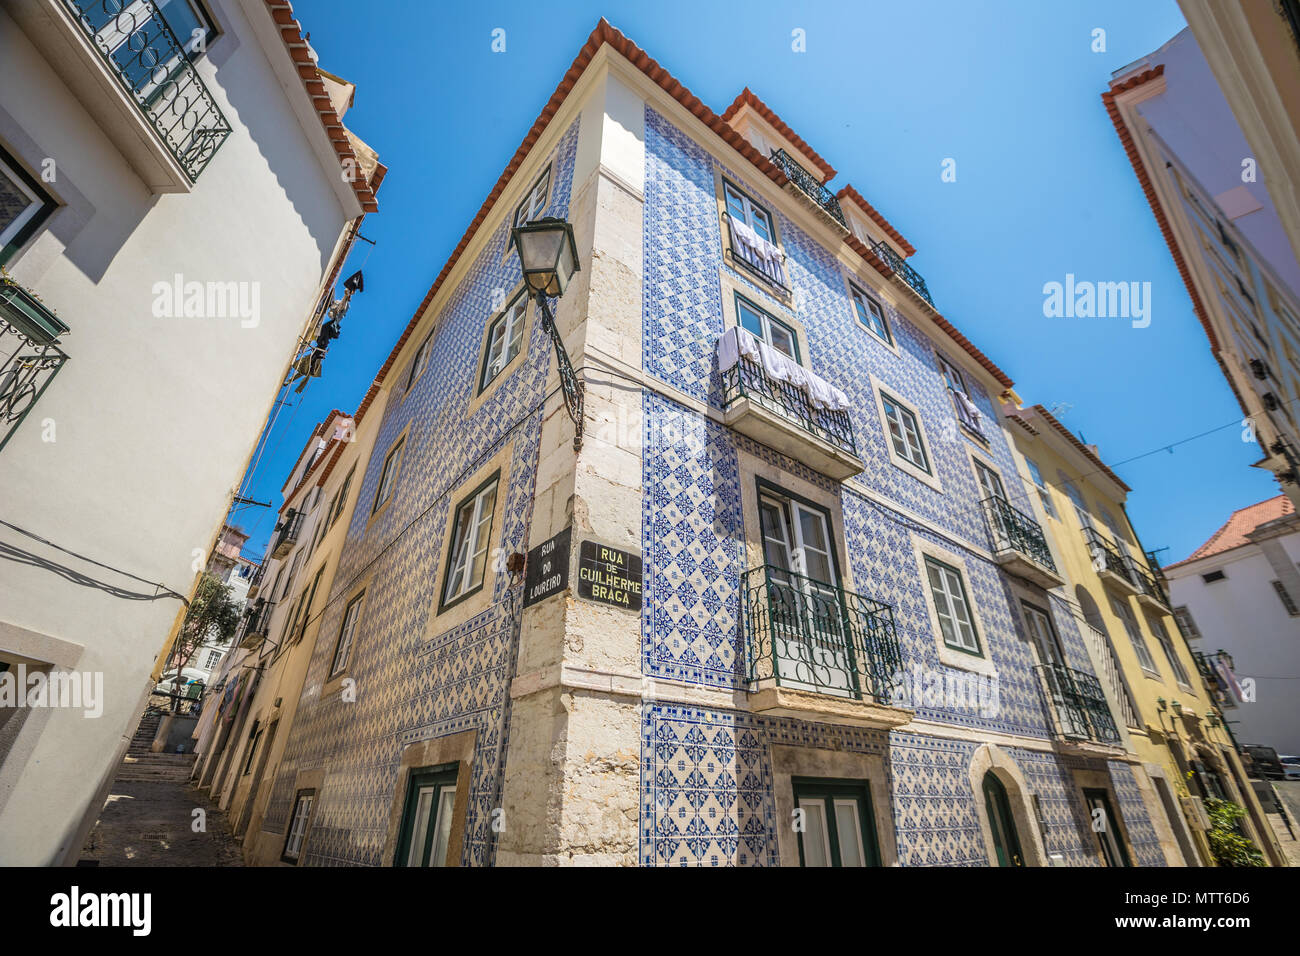 Palazzi piastrellati a Lisbona Foto Stock